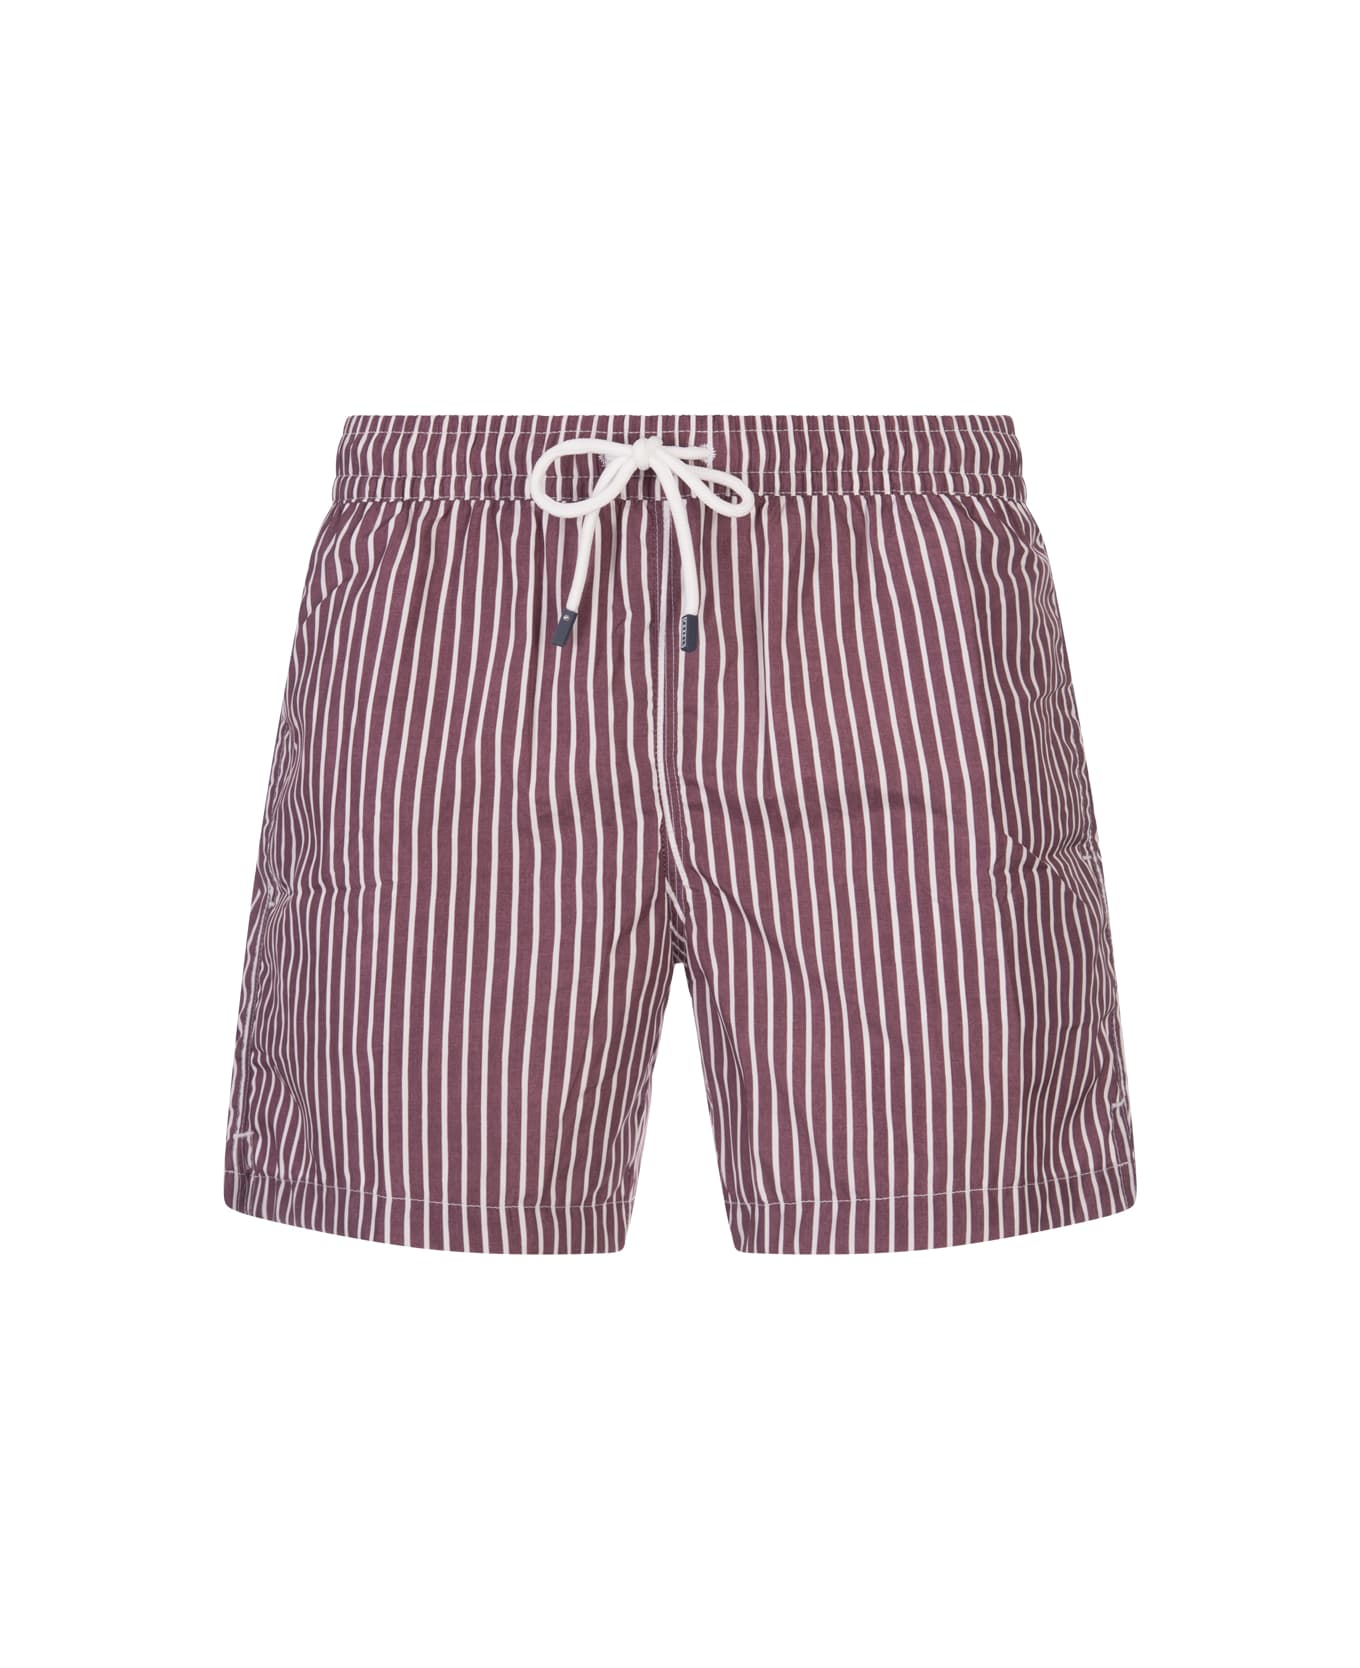 Fedeli Burgundy And White Striped Swim Shorts - Red スイムトランクス